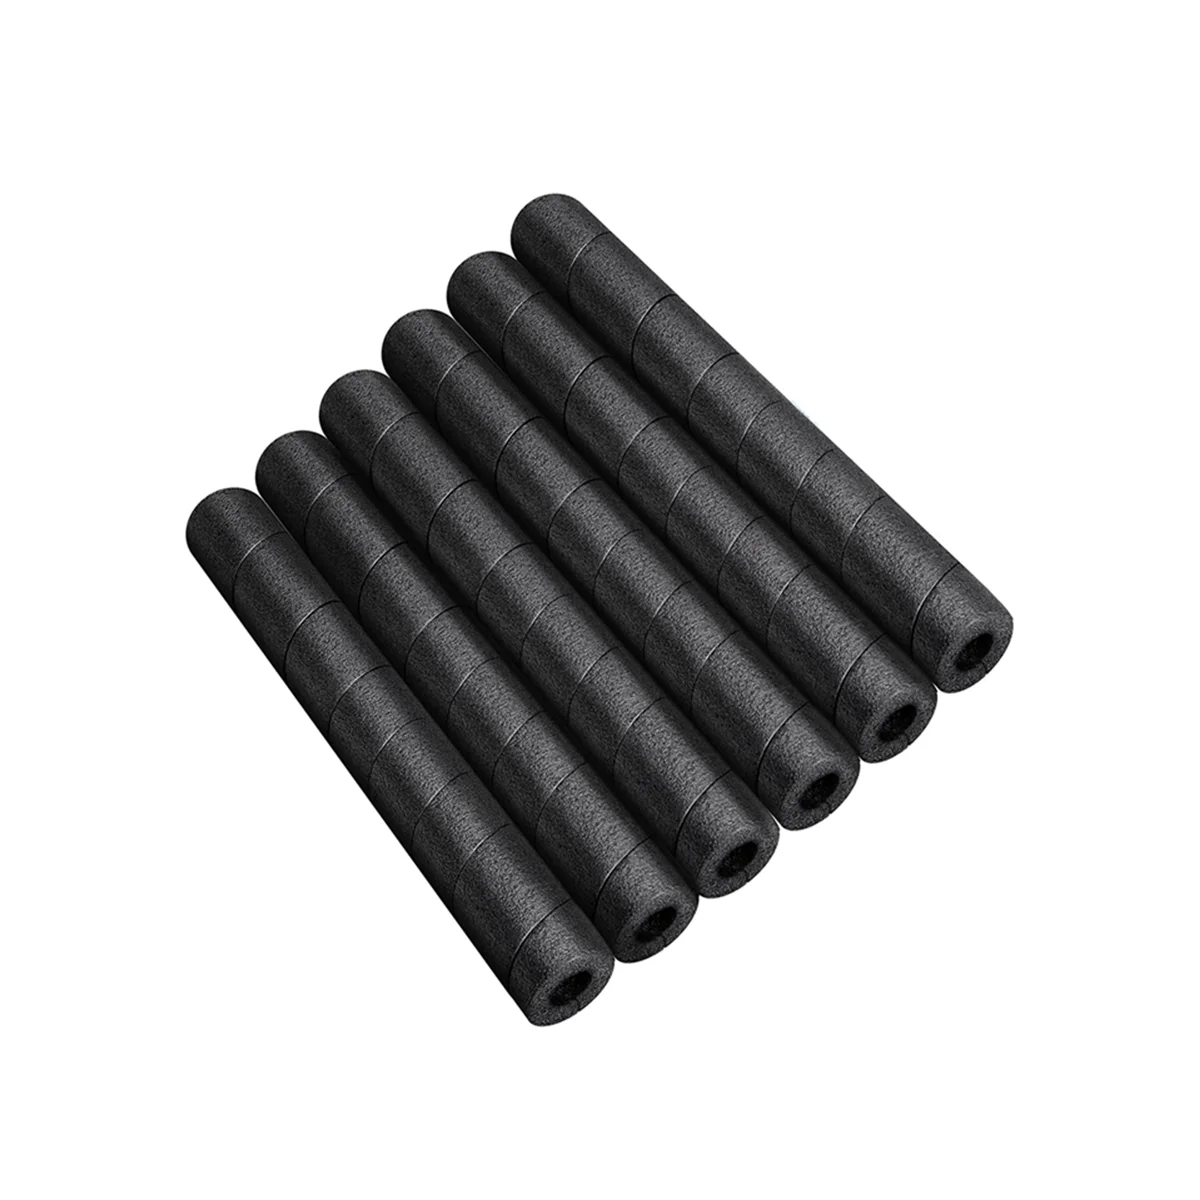 

6 Pcs Pipe Insulation Foam Tube -Foam Pipe Covers -Soft Foam Tubing Insulation Wrap Spiral Basement Pole Cover Protector